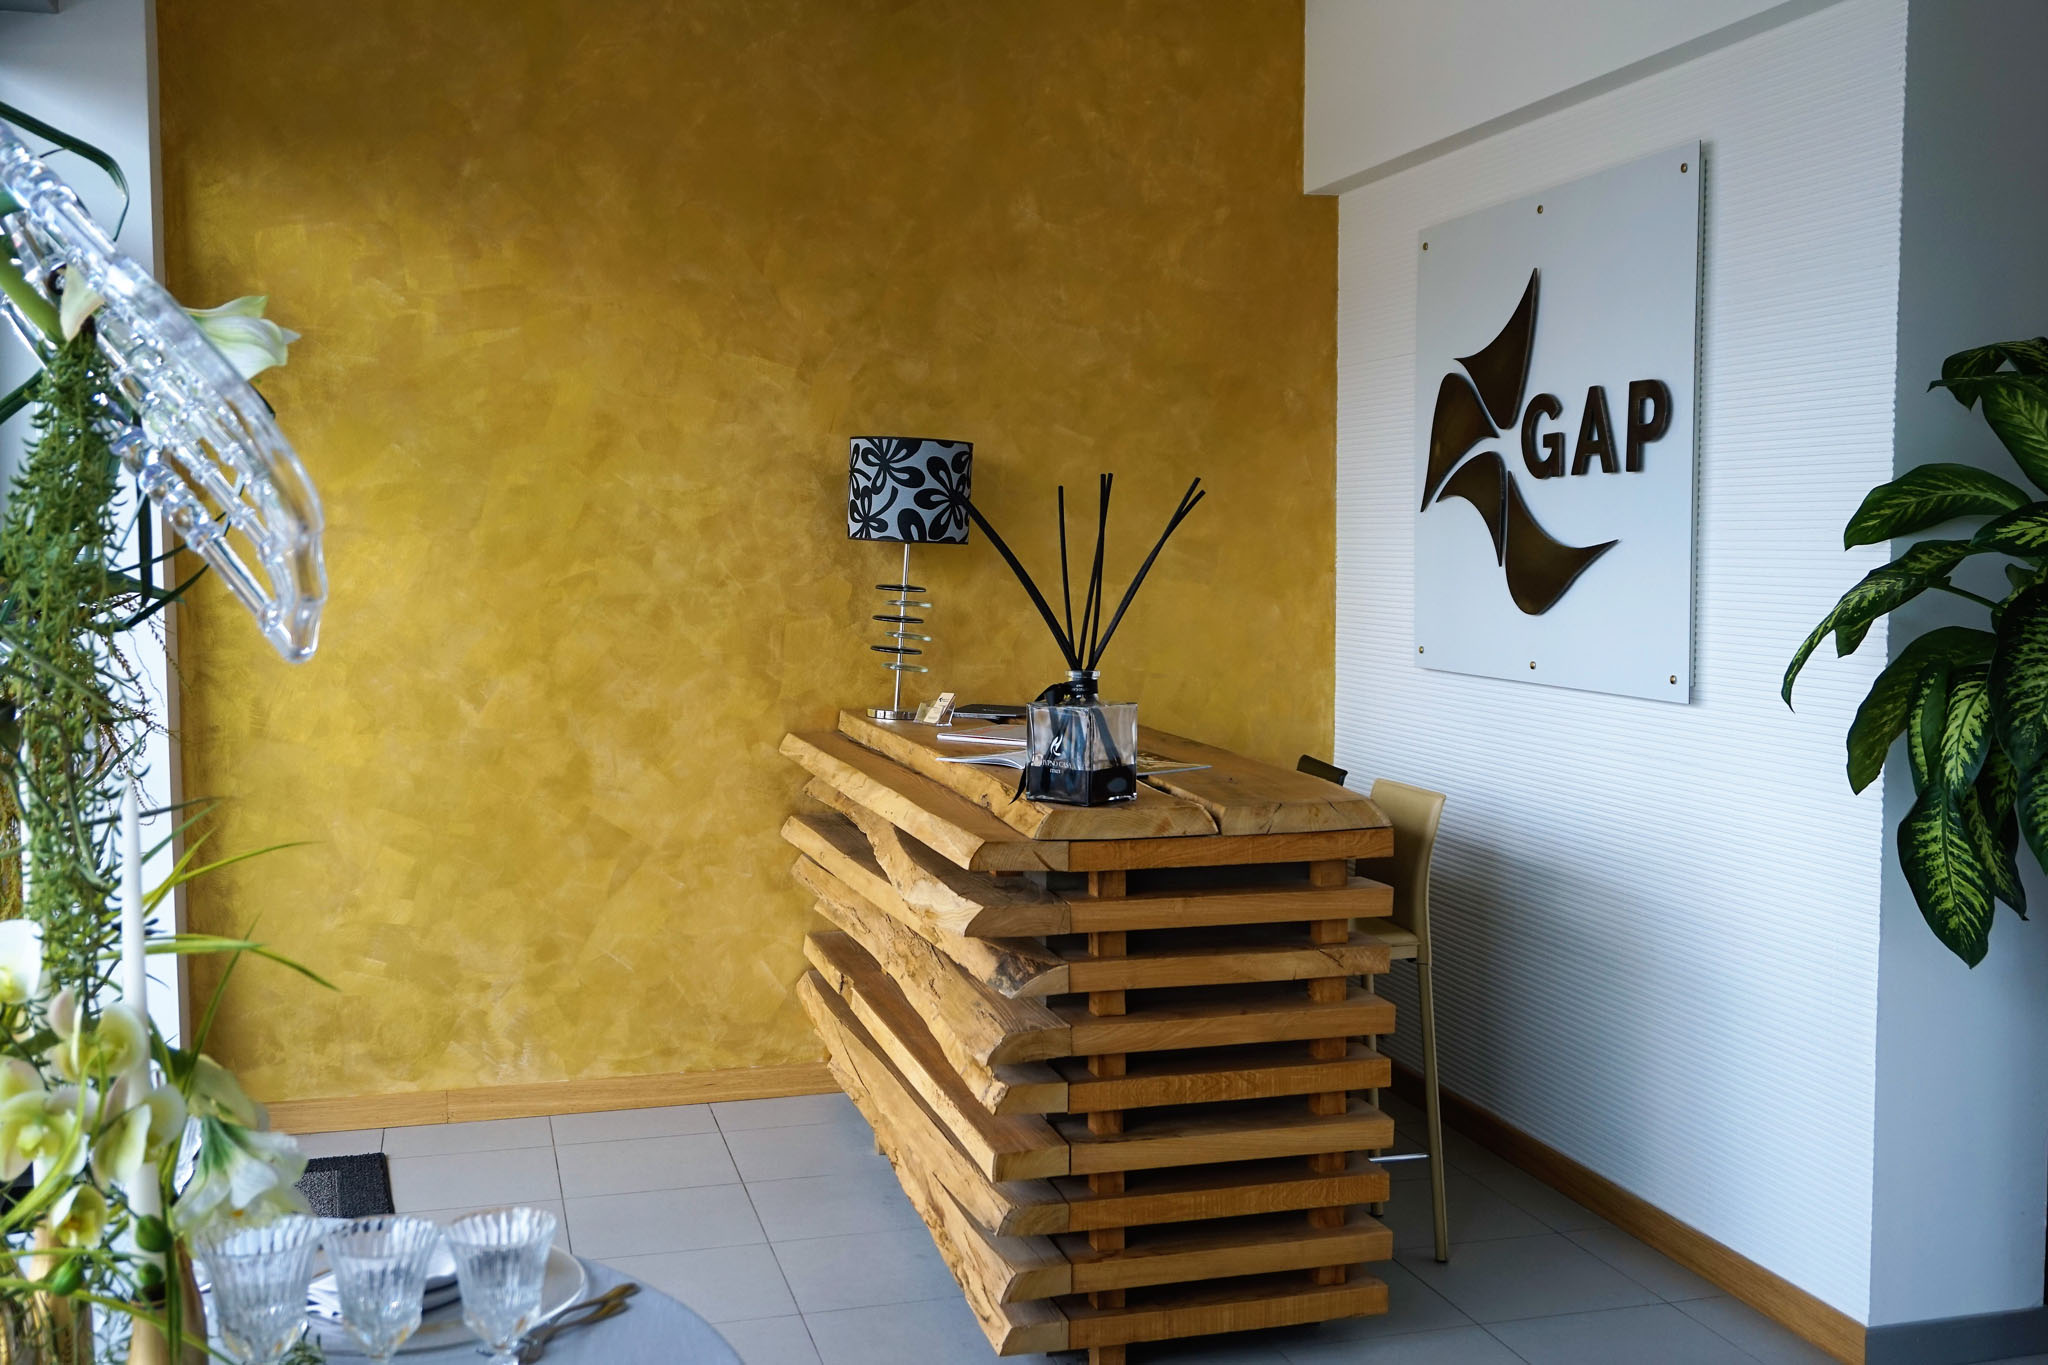 Atelier Gap Eventi